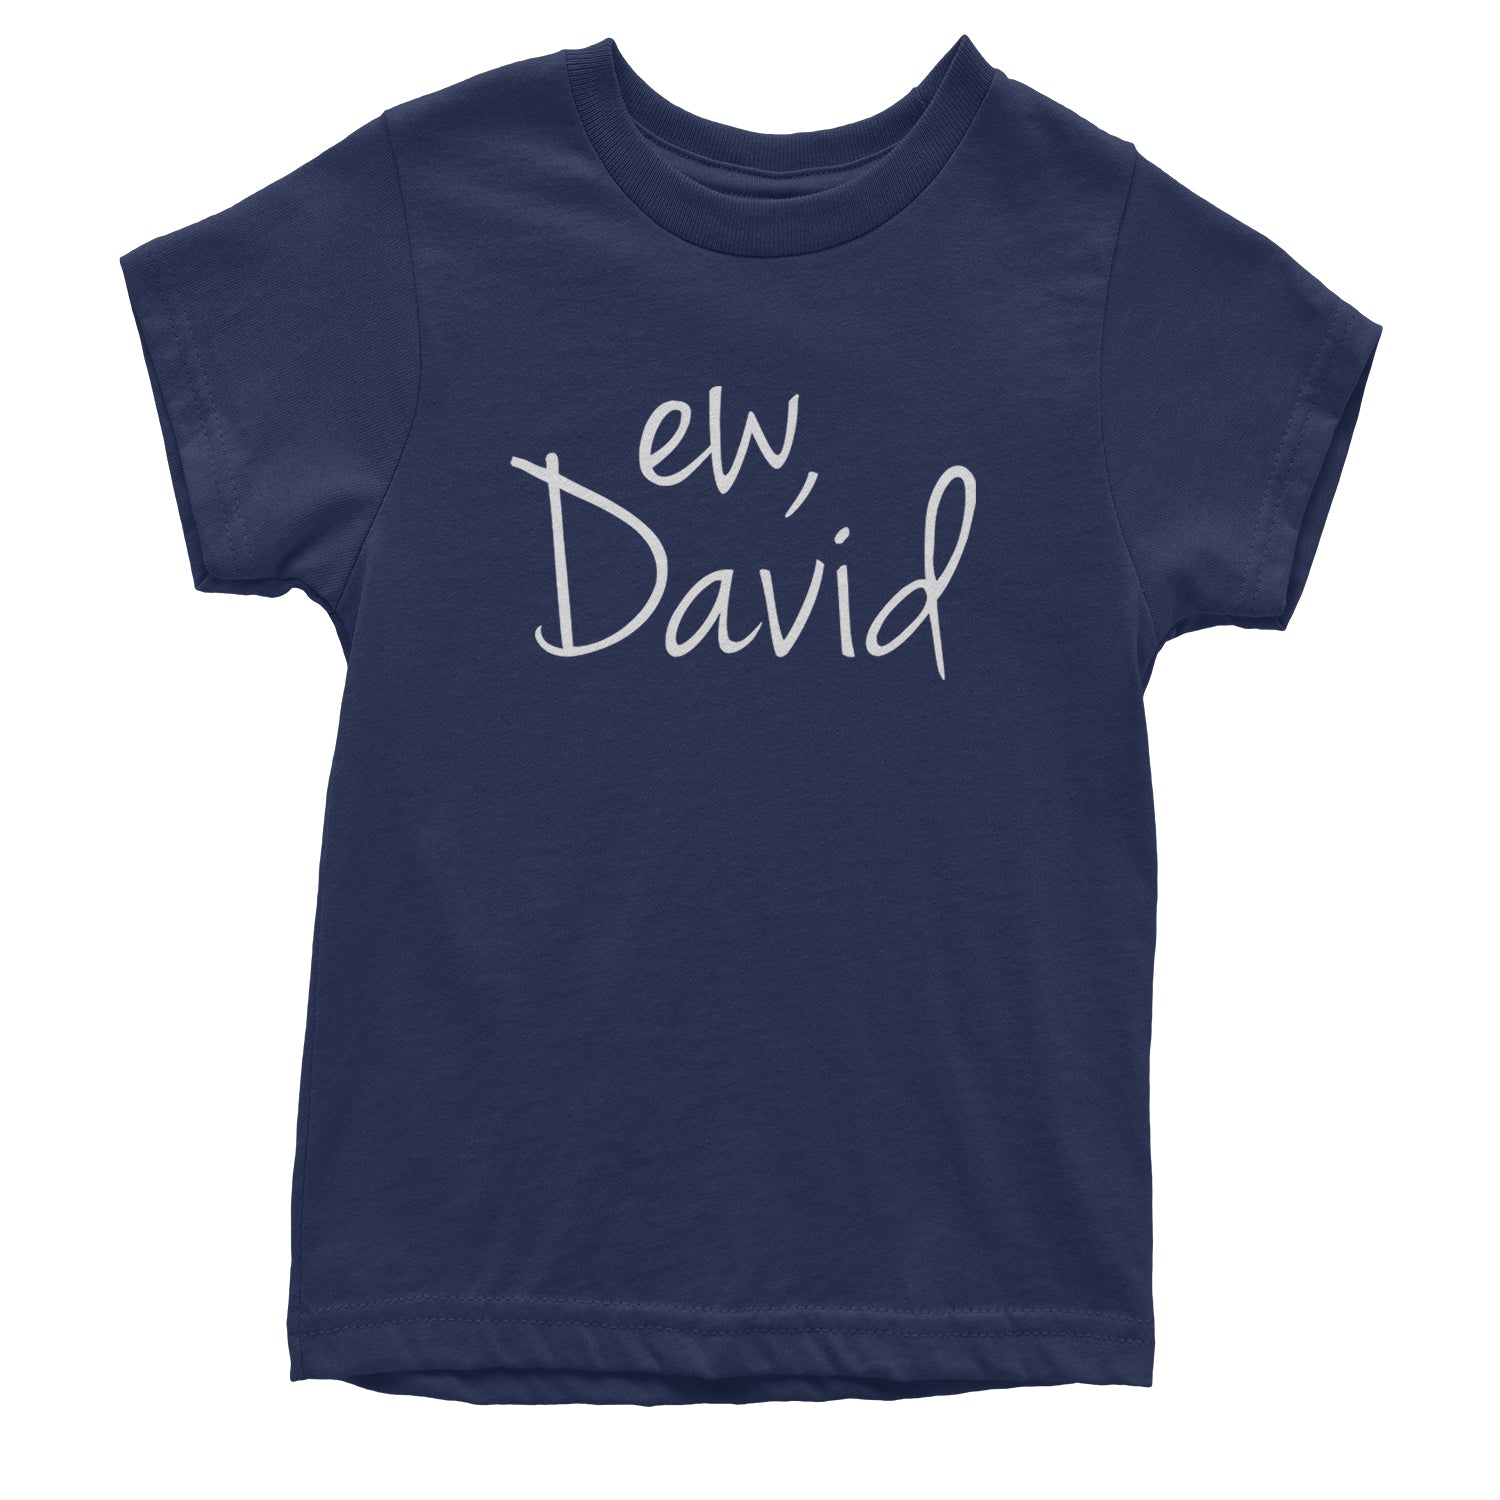 Ew, David Funny Creek TV Show Youth T-shirt alexis, bit, david, eugene, levy, little, nonchalance, schitt by Expression Tees